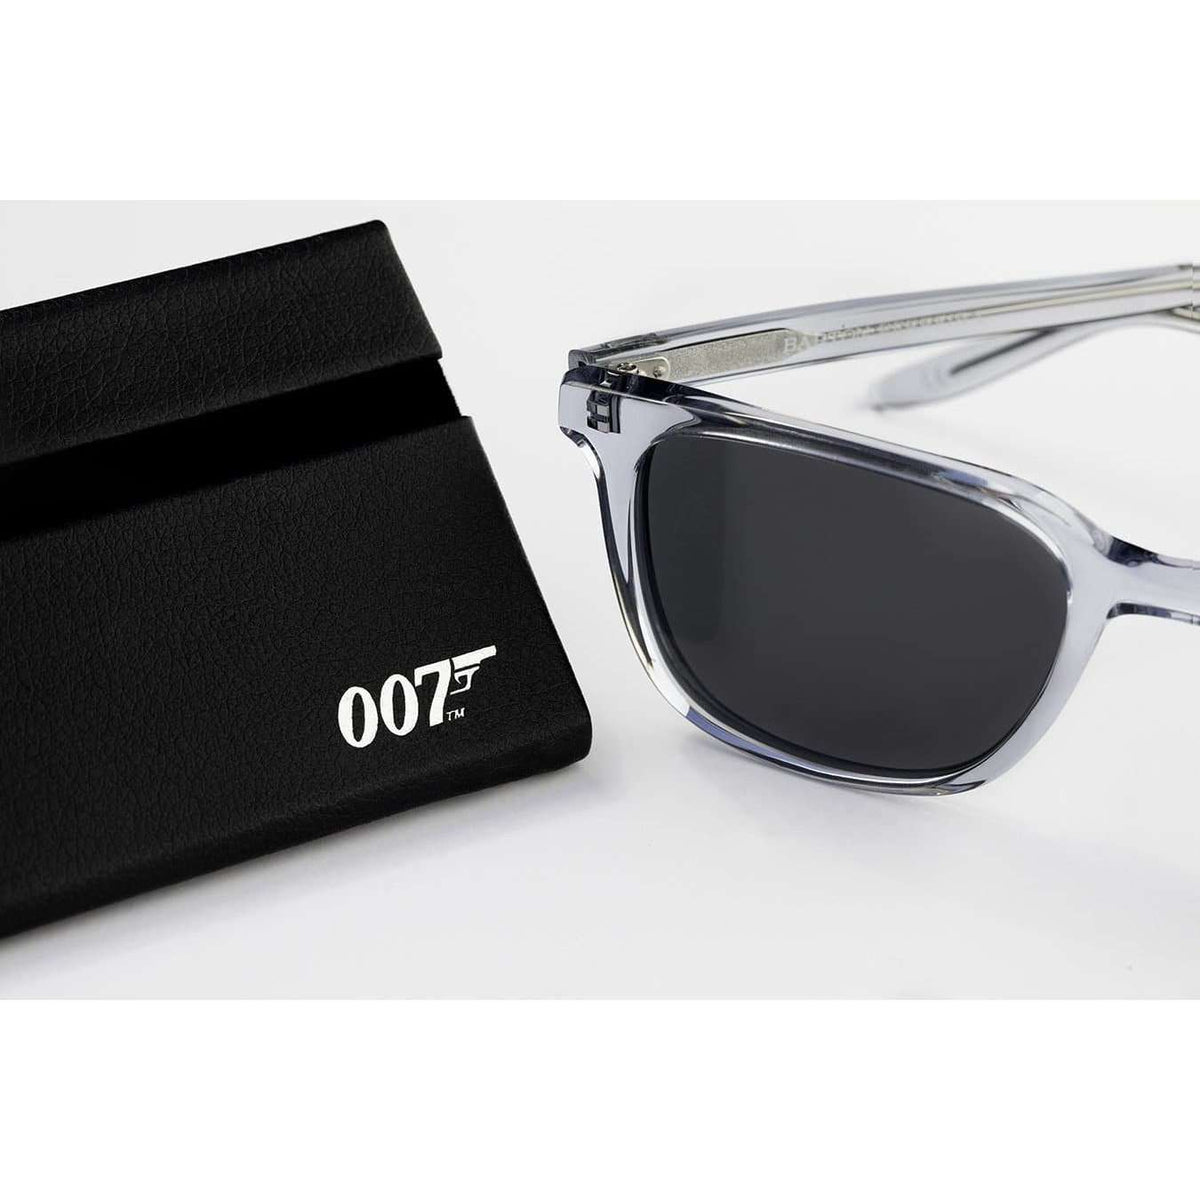 007 Joe Sunglasses - Hakadal / Noir Edition - By Barton Perreira SUNGLASSES Barton Perreira 